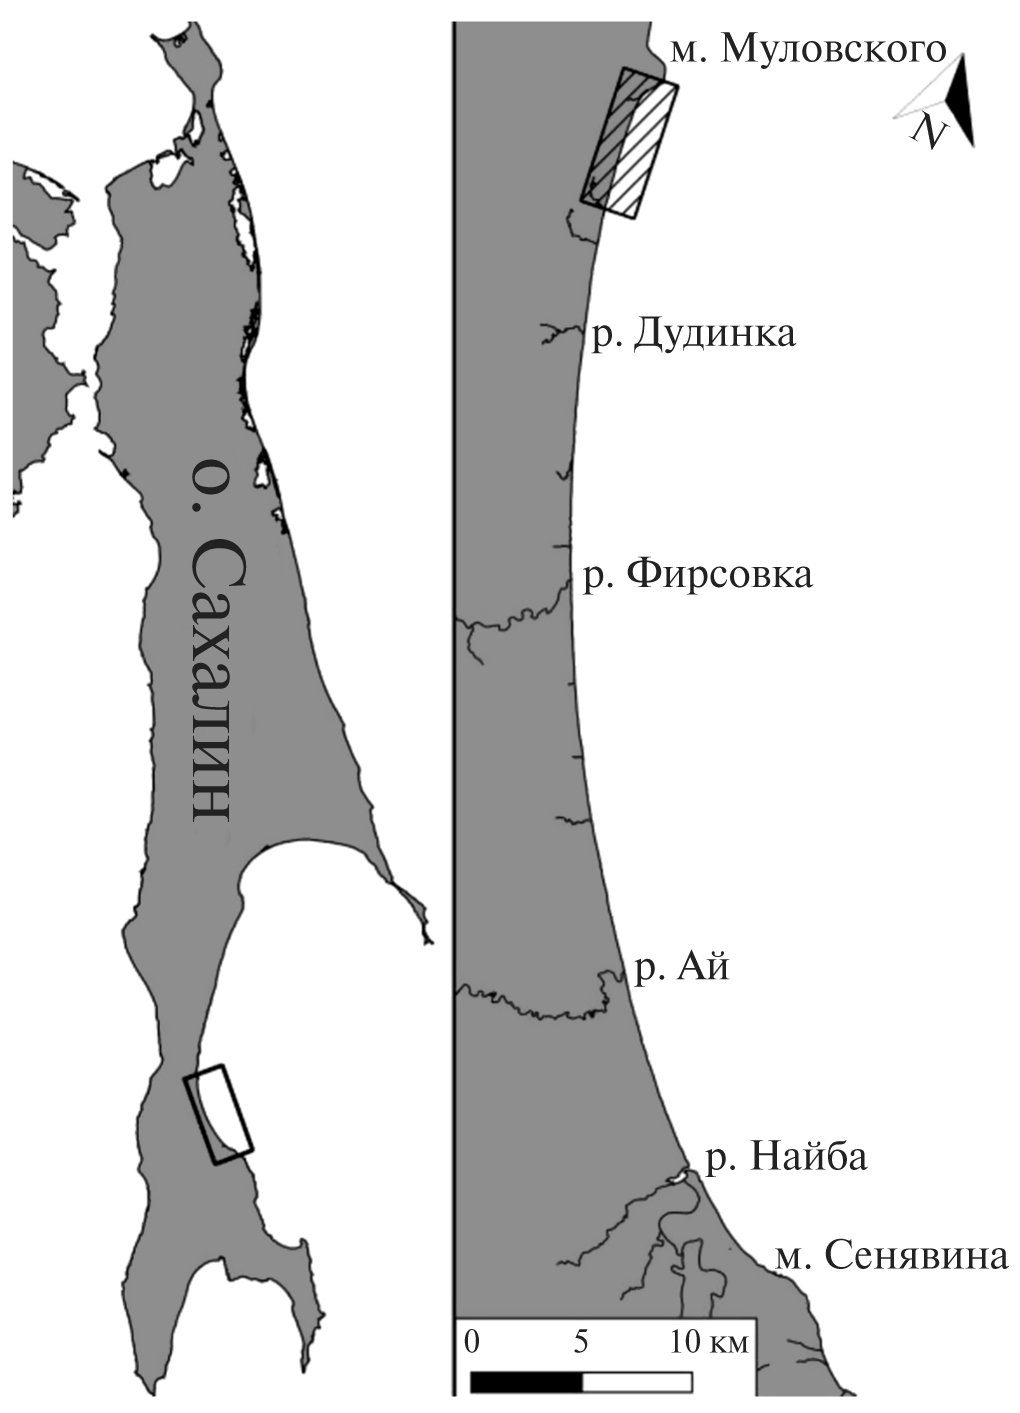 Карта рек сахалина